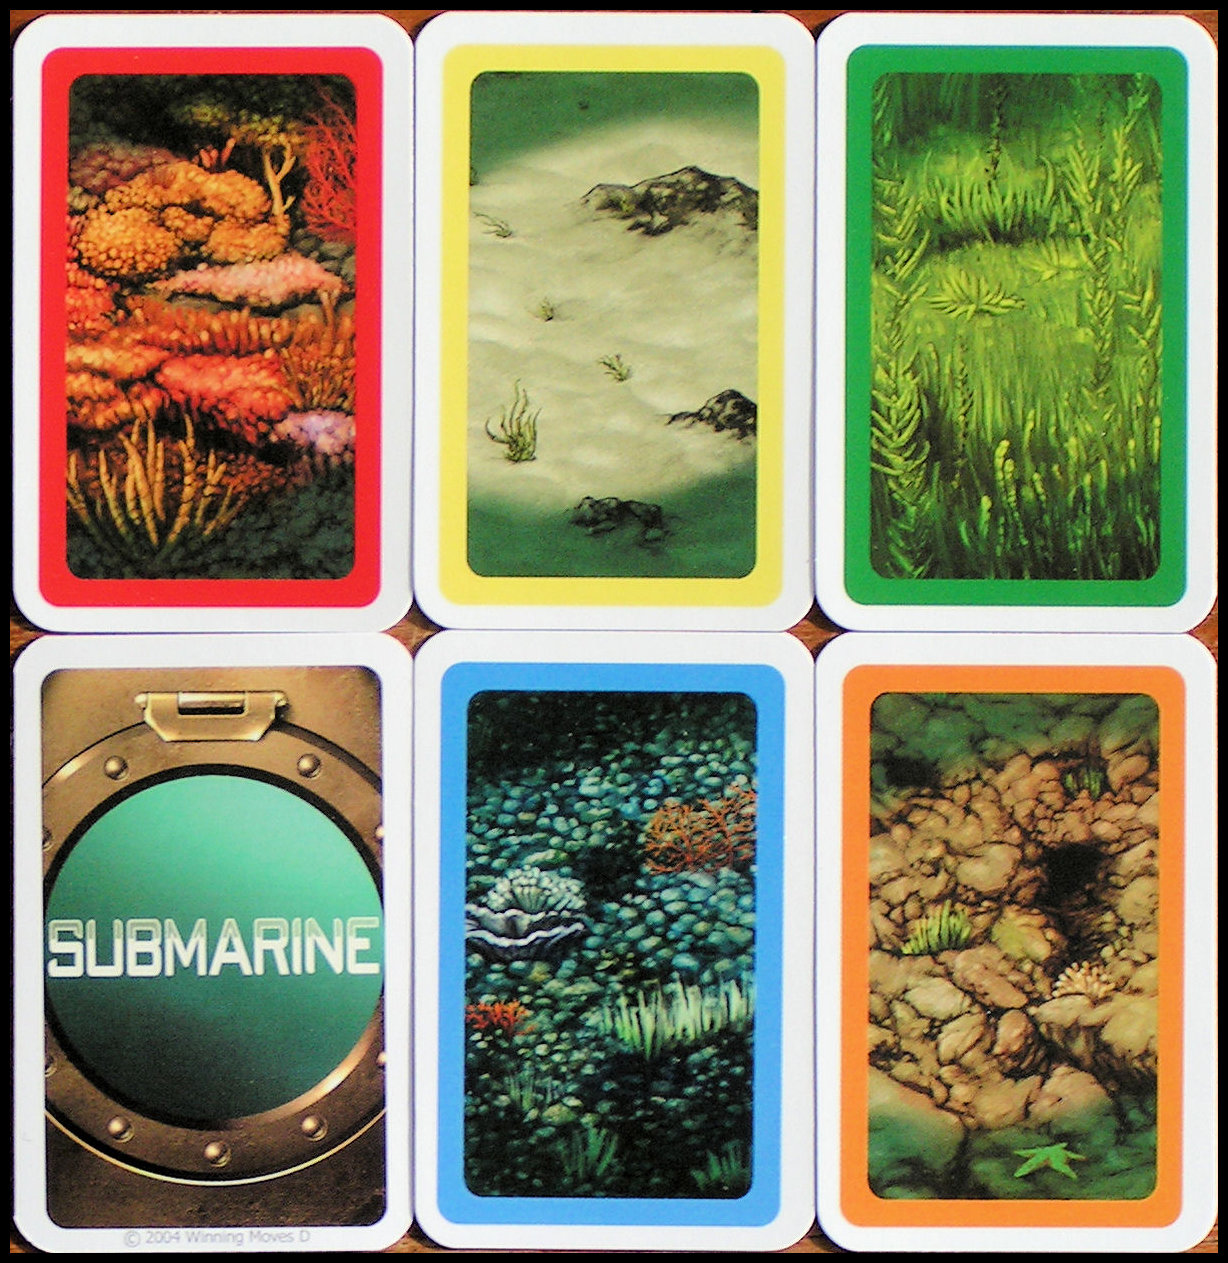 Submarine - Cards